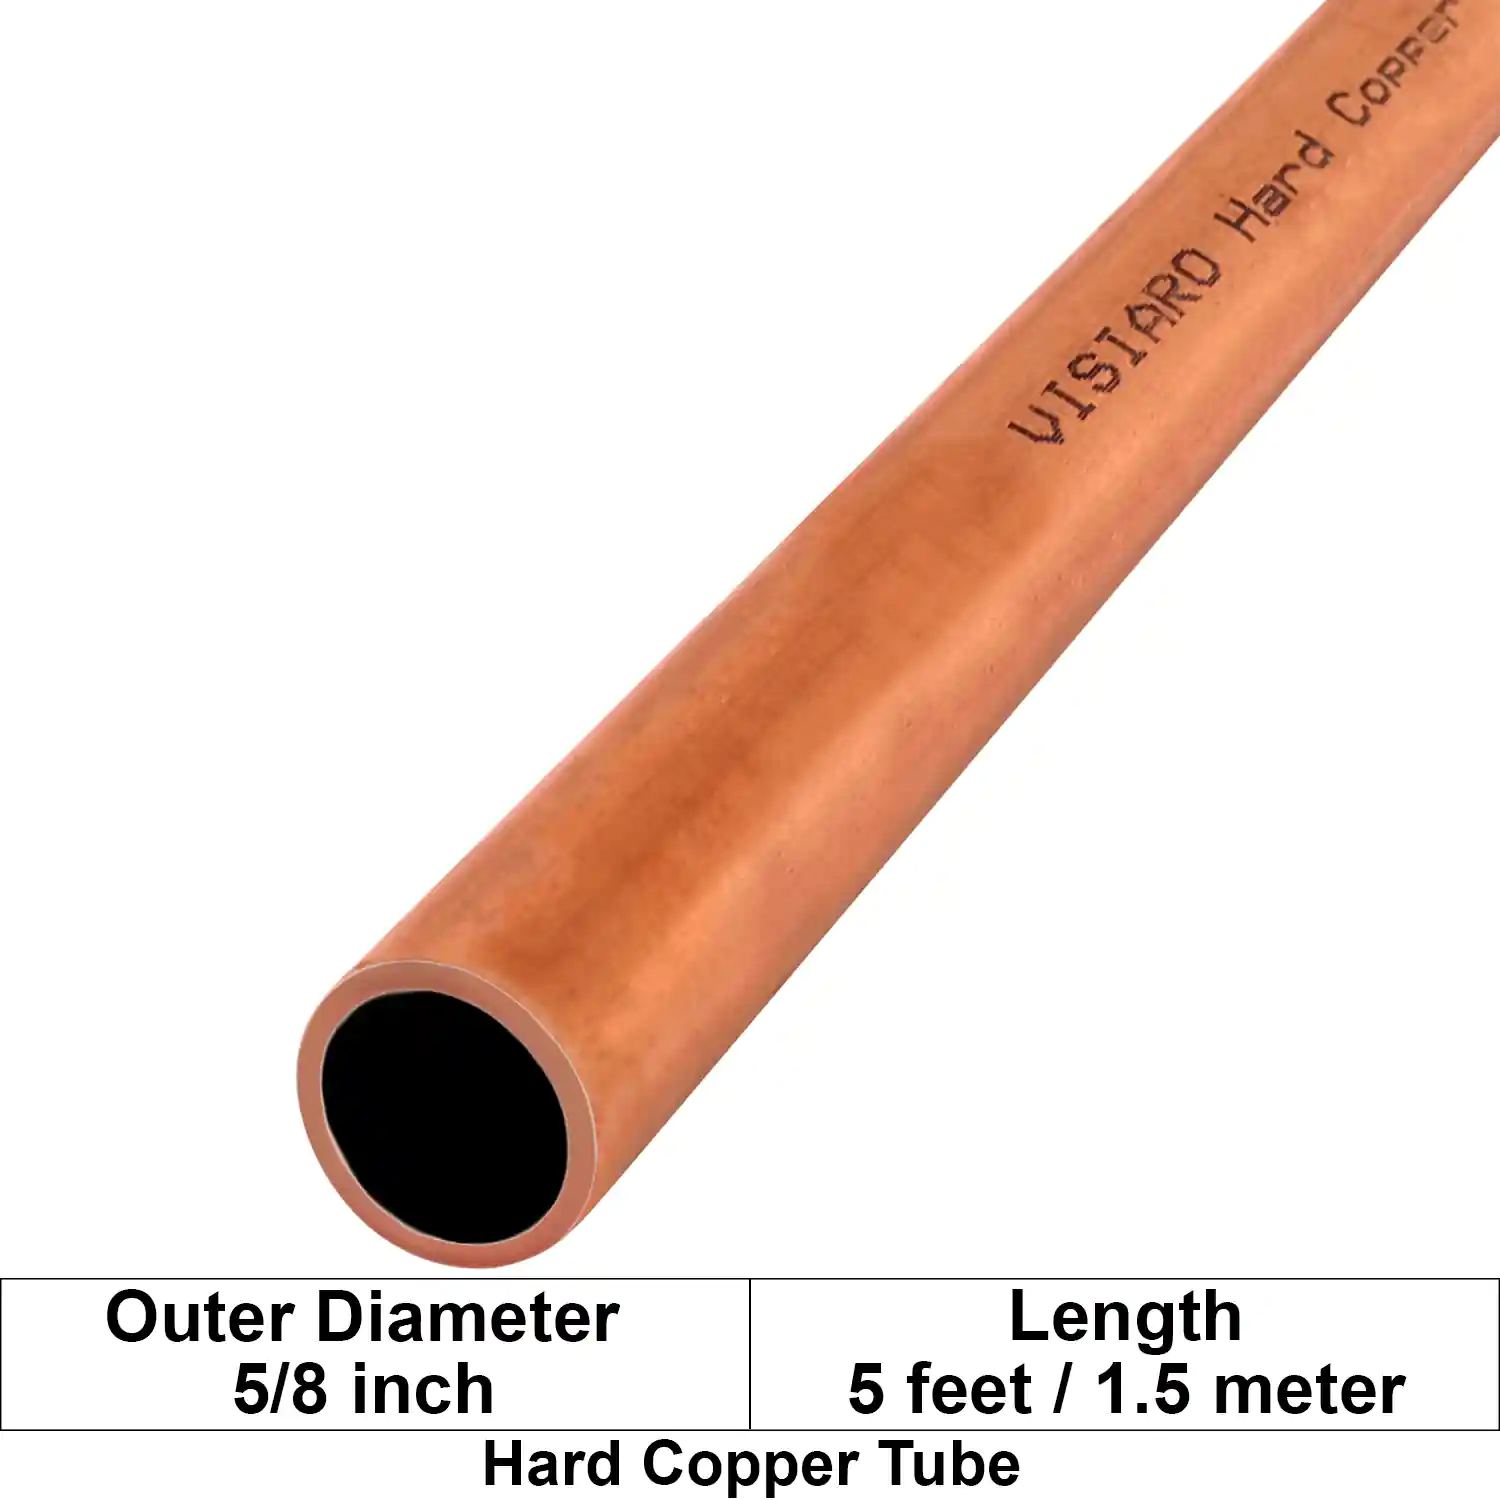 Visiaro Hard Copper Tube 5 feet long Outer Diameter - 5/8 inch